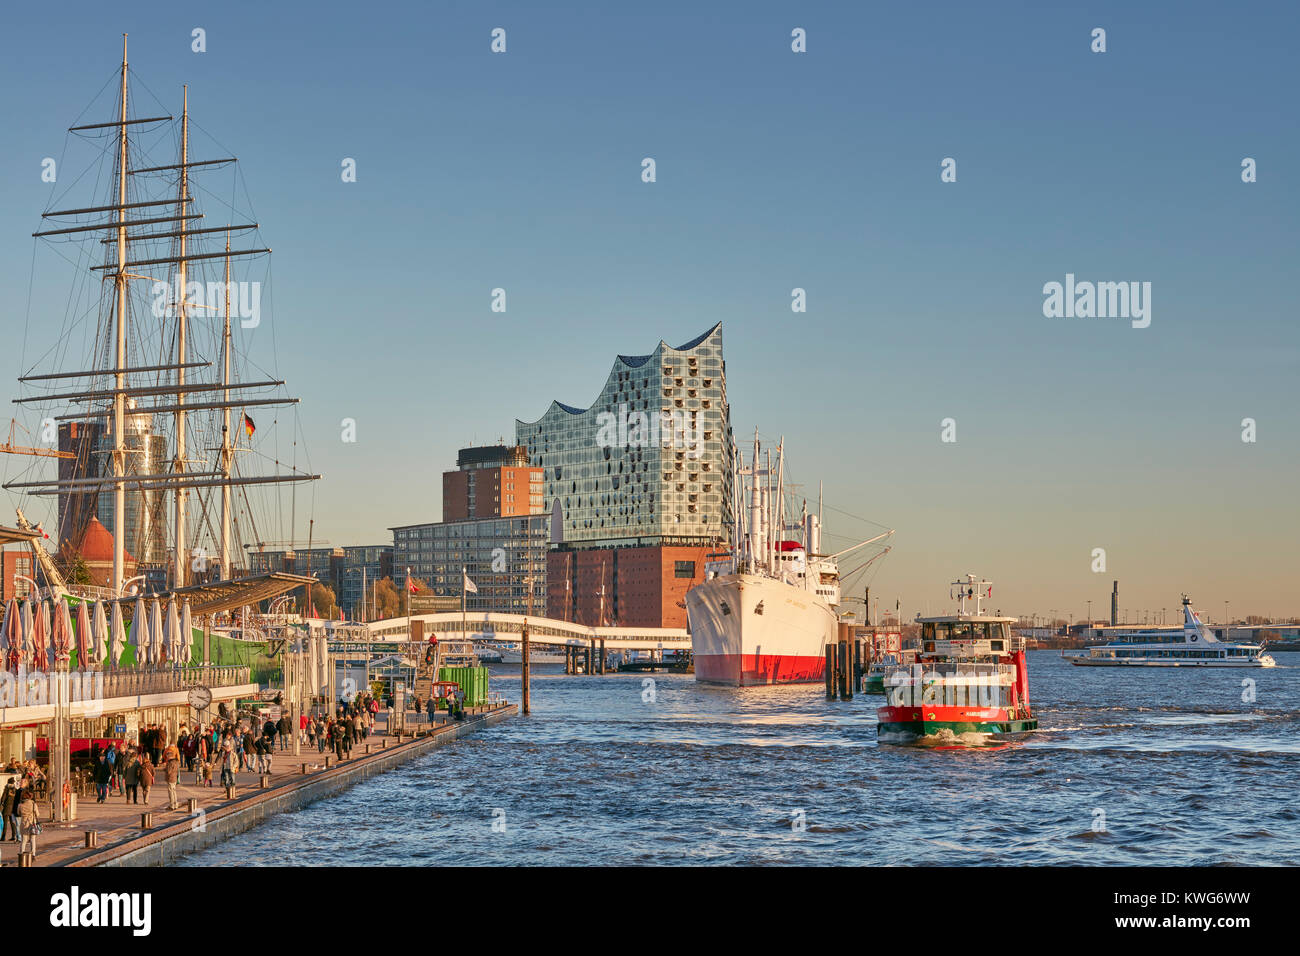 Elbphilharmonie, concert hall at the River Elbe, HafenCity, Hamburg, Germany. With historic ships 'Rickmer Rickmers' and 'Cap San Diego' Stock Photo